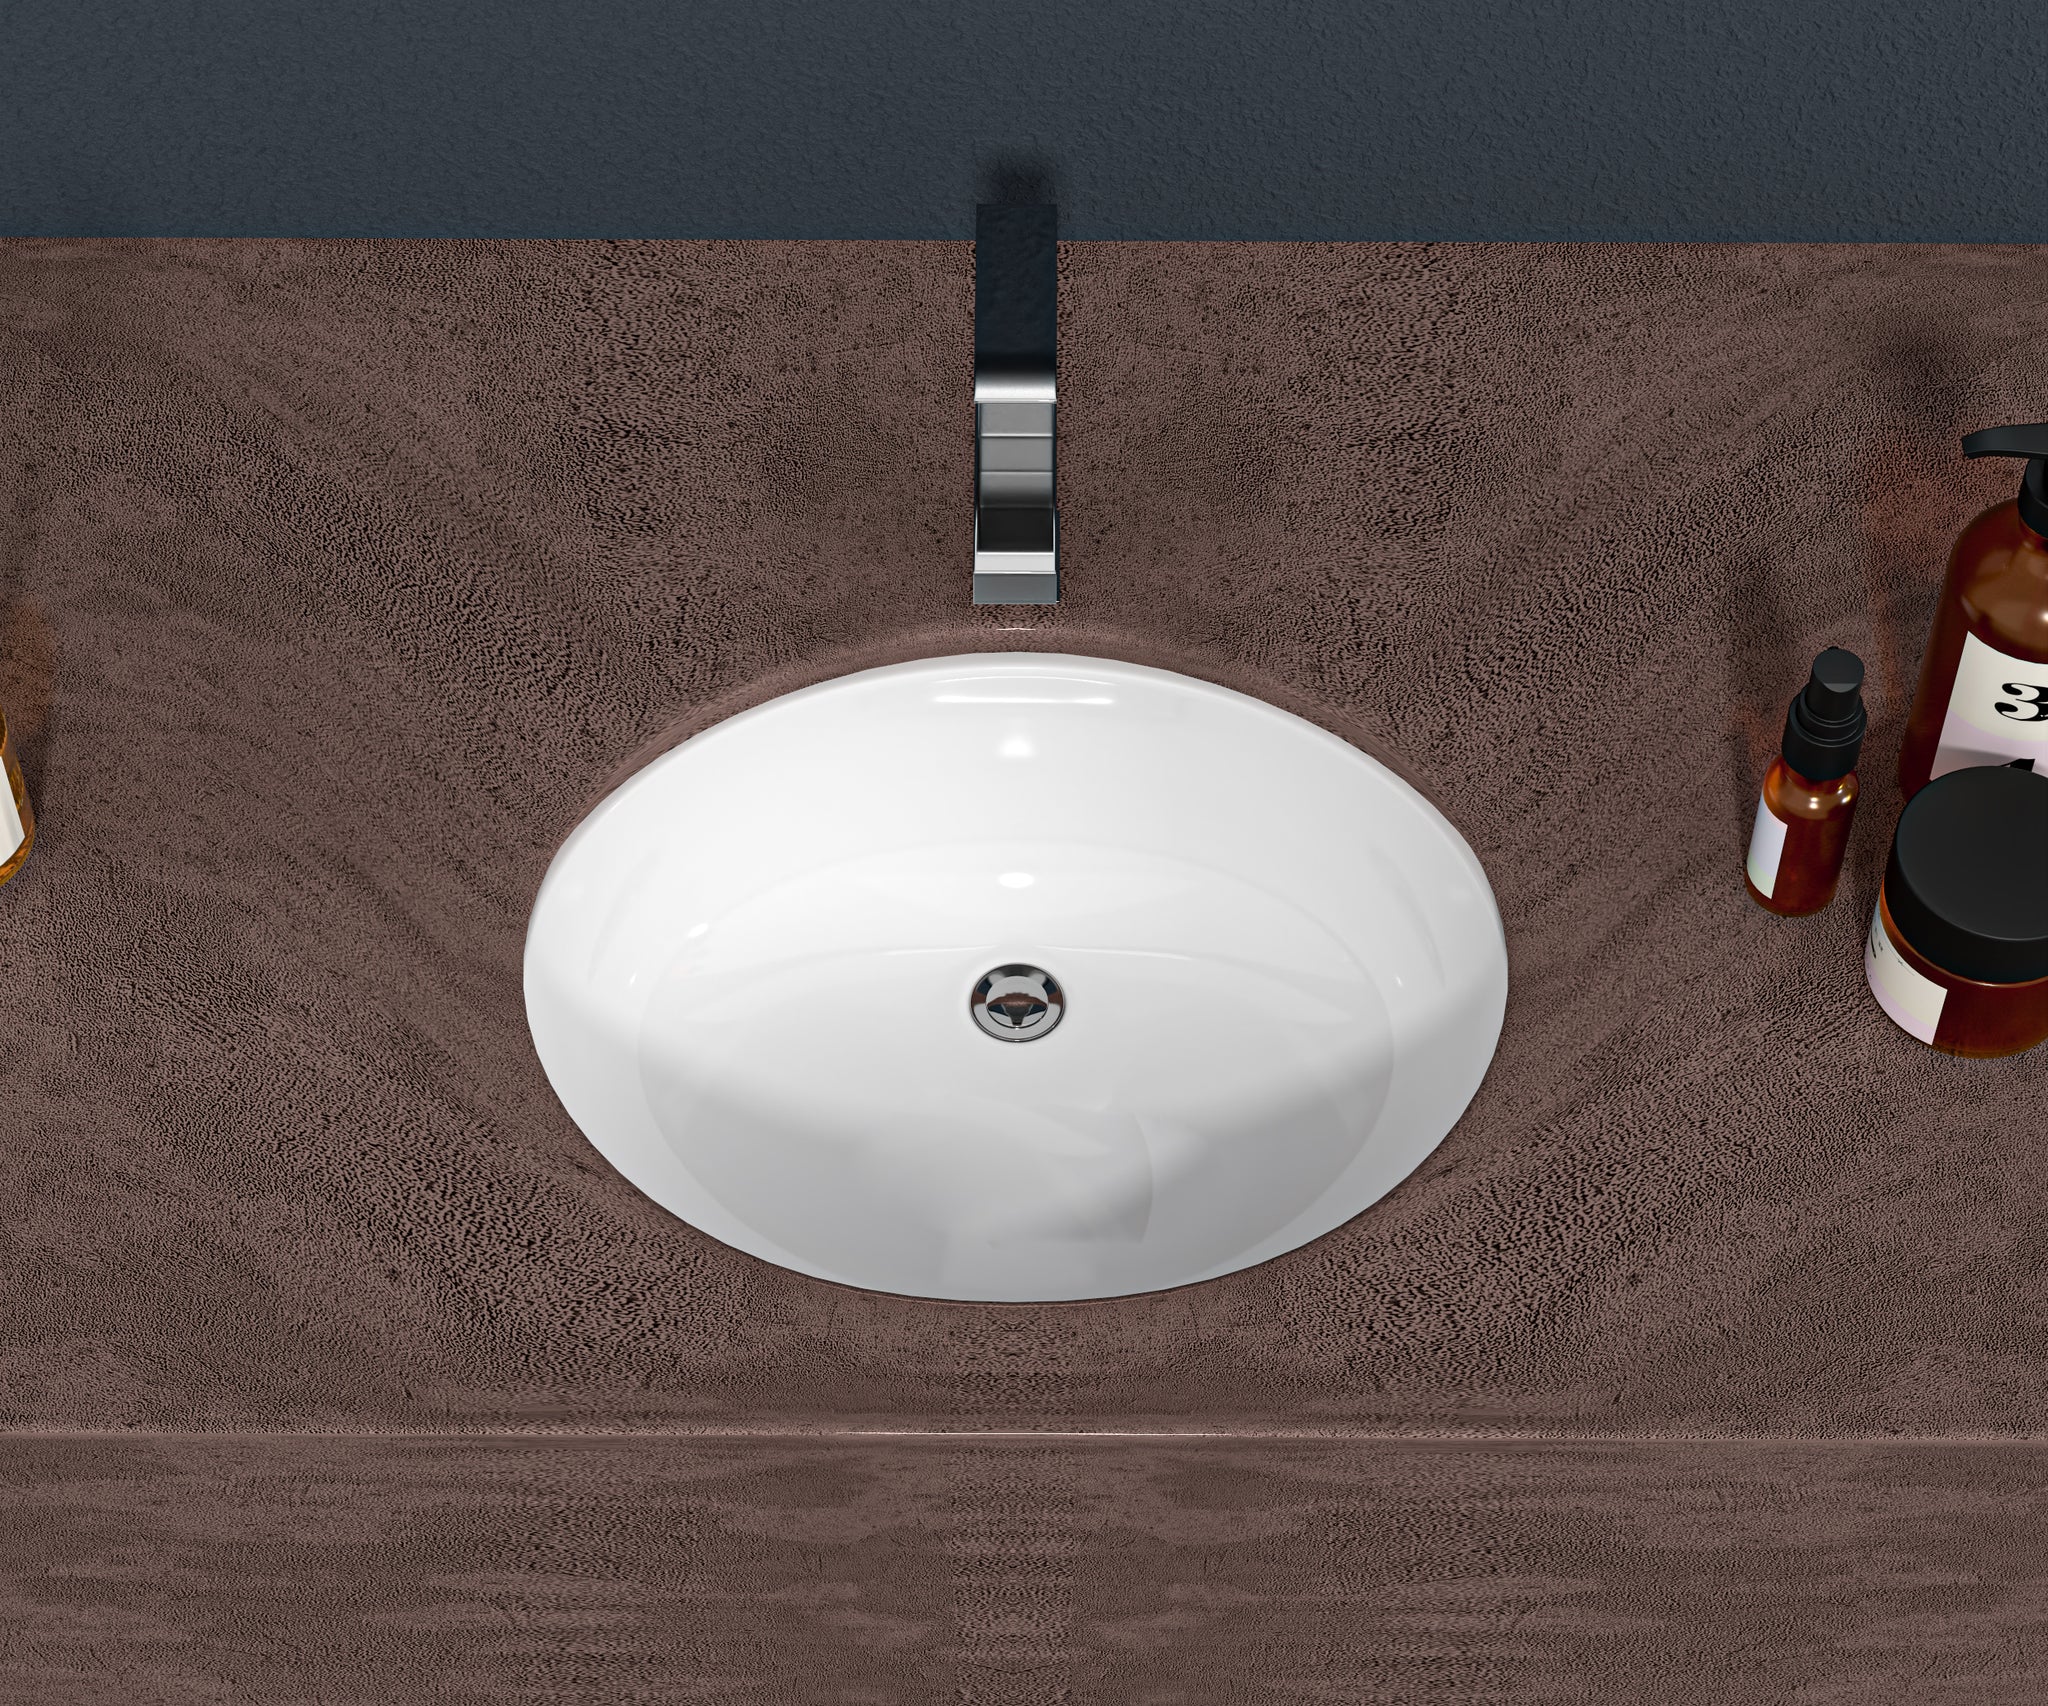 19"x16" White Ceramic Oval Undermount Bathroom Sink